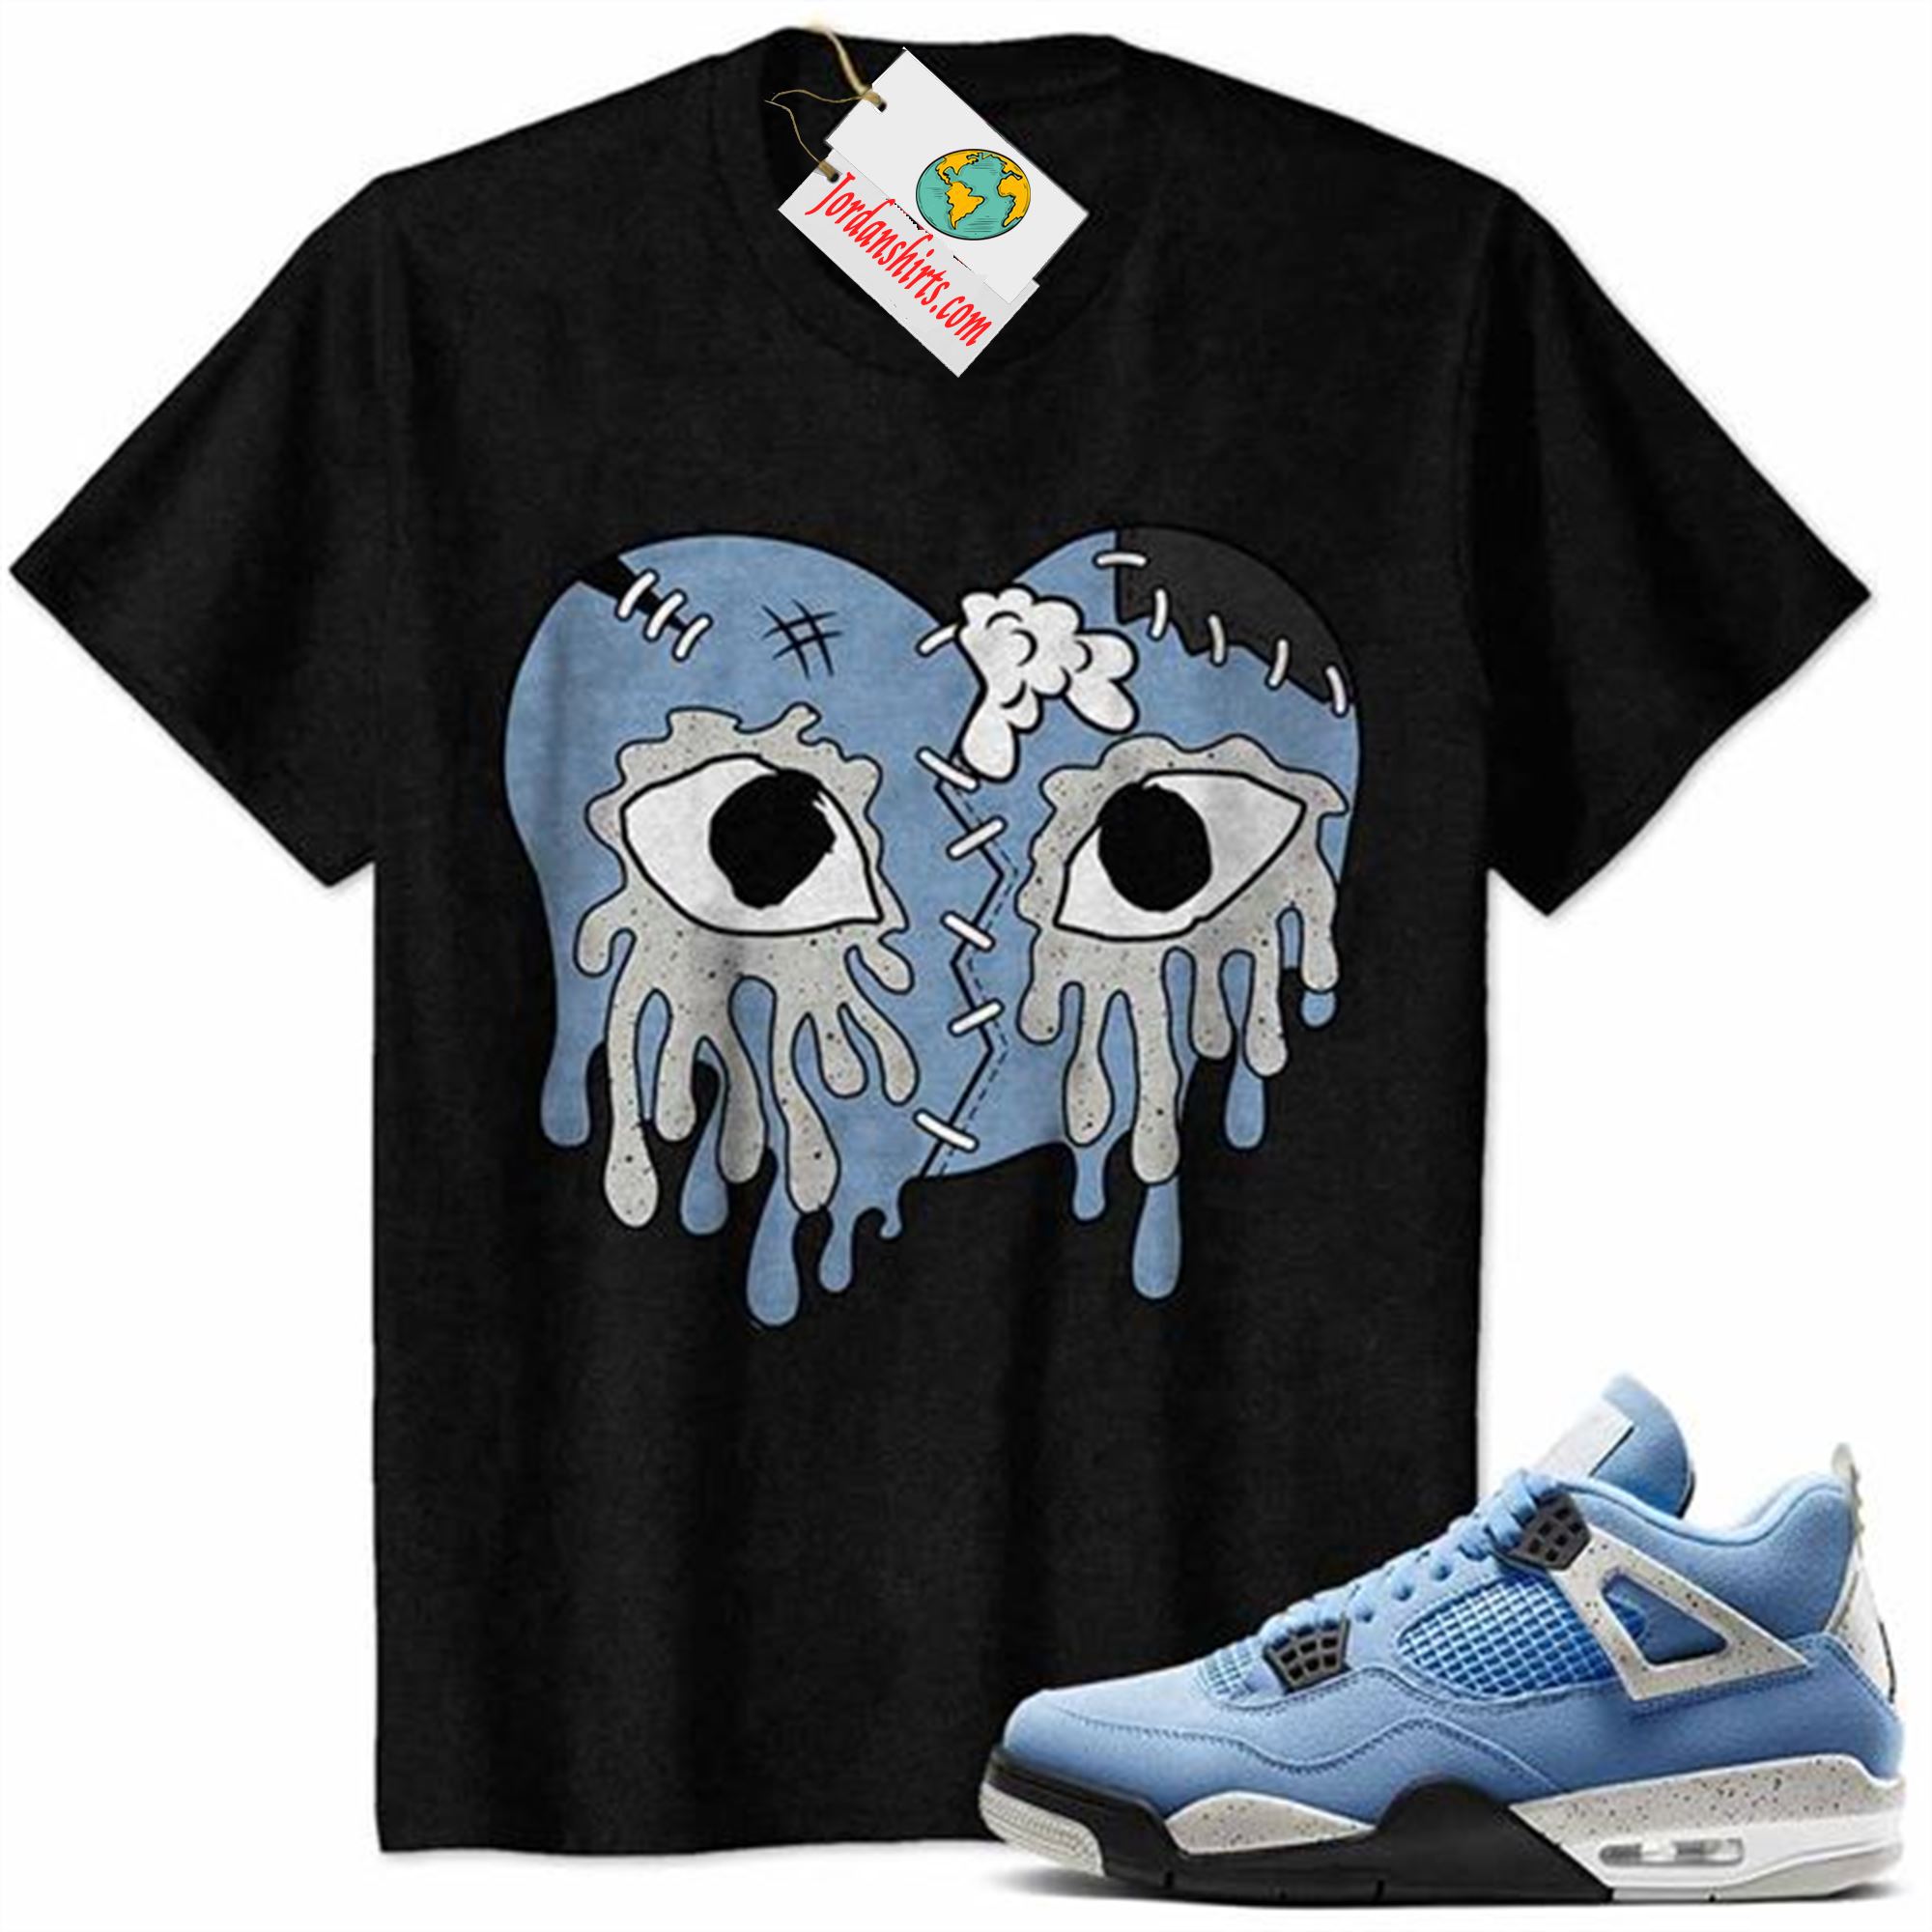 Jordan 4 Shirt, Crying Heart Drip Black Air Jordan 4 University Blue 4s Full Size Up To 5xl